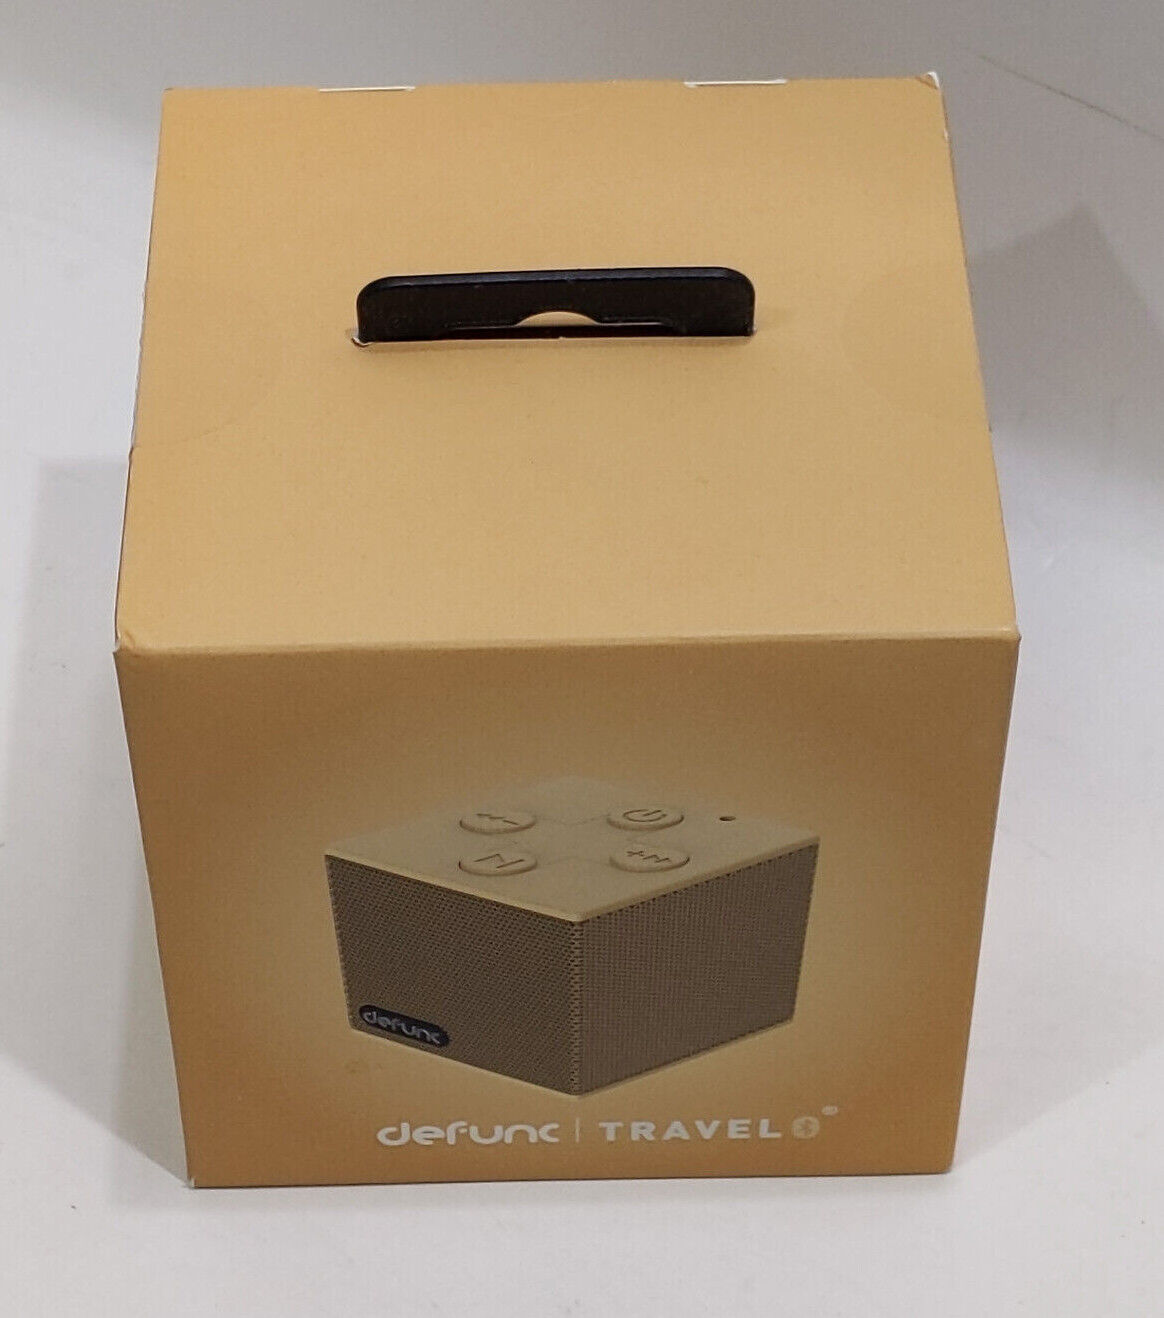  Defunc Travel Mini Bluetooth Speaker in Gold/Cream  1708171 NEW SEALED 